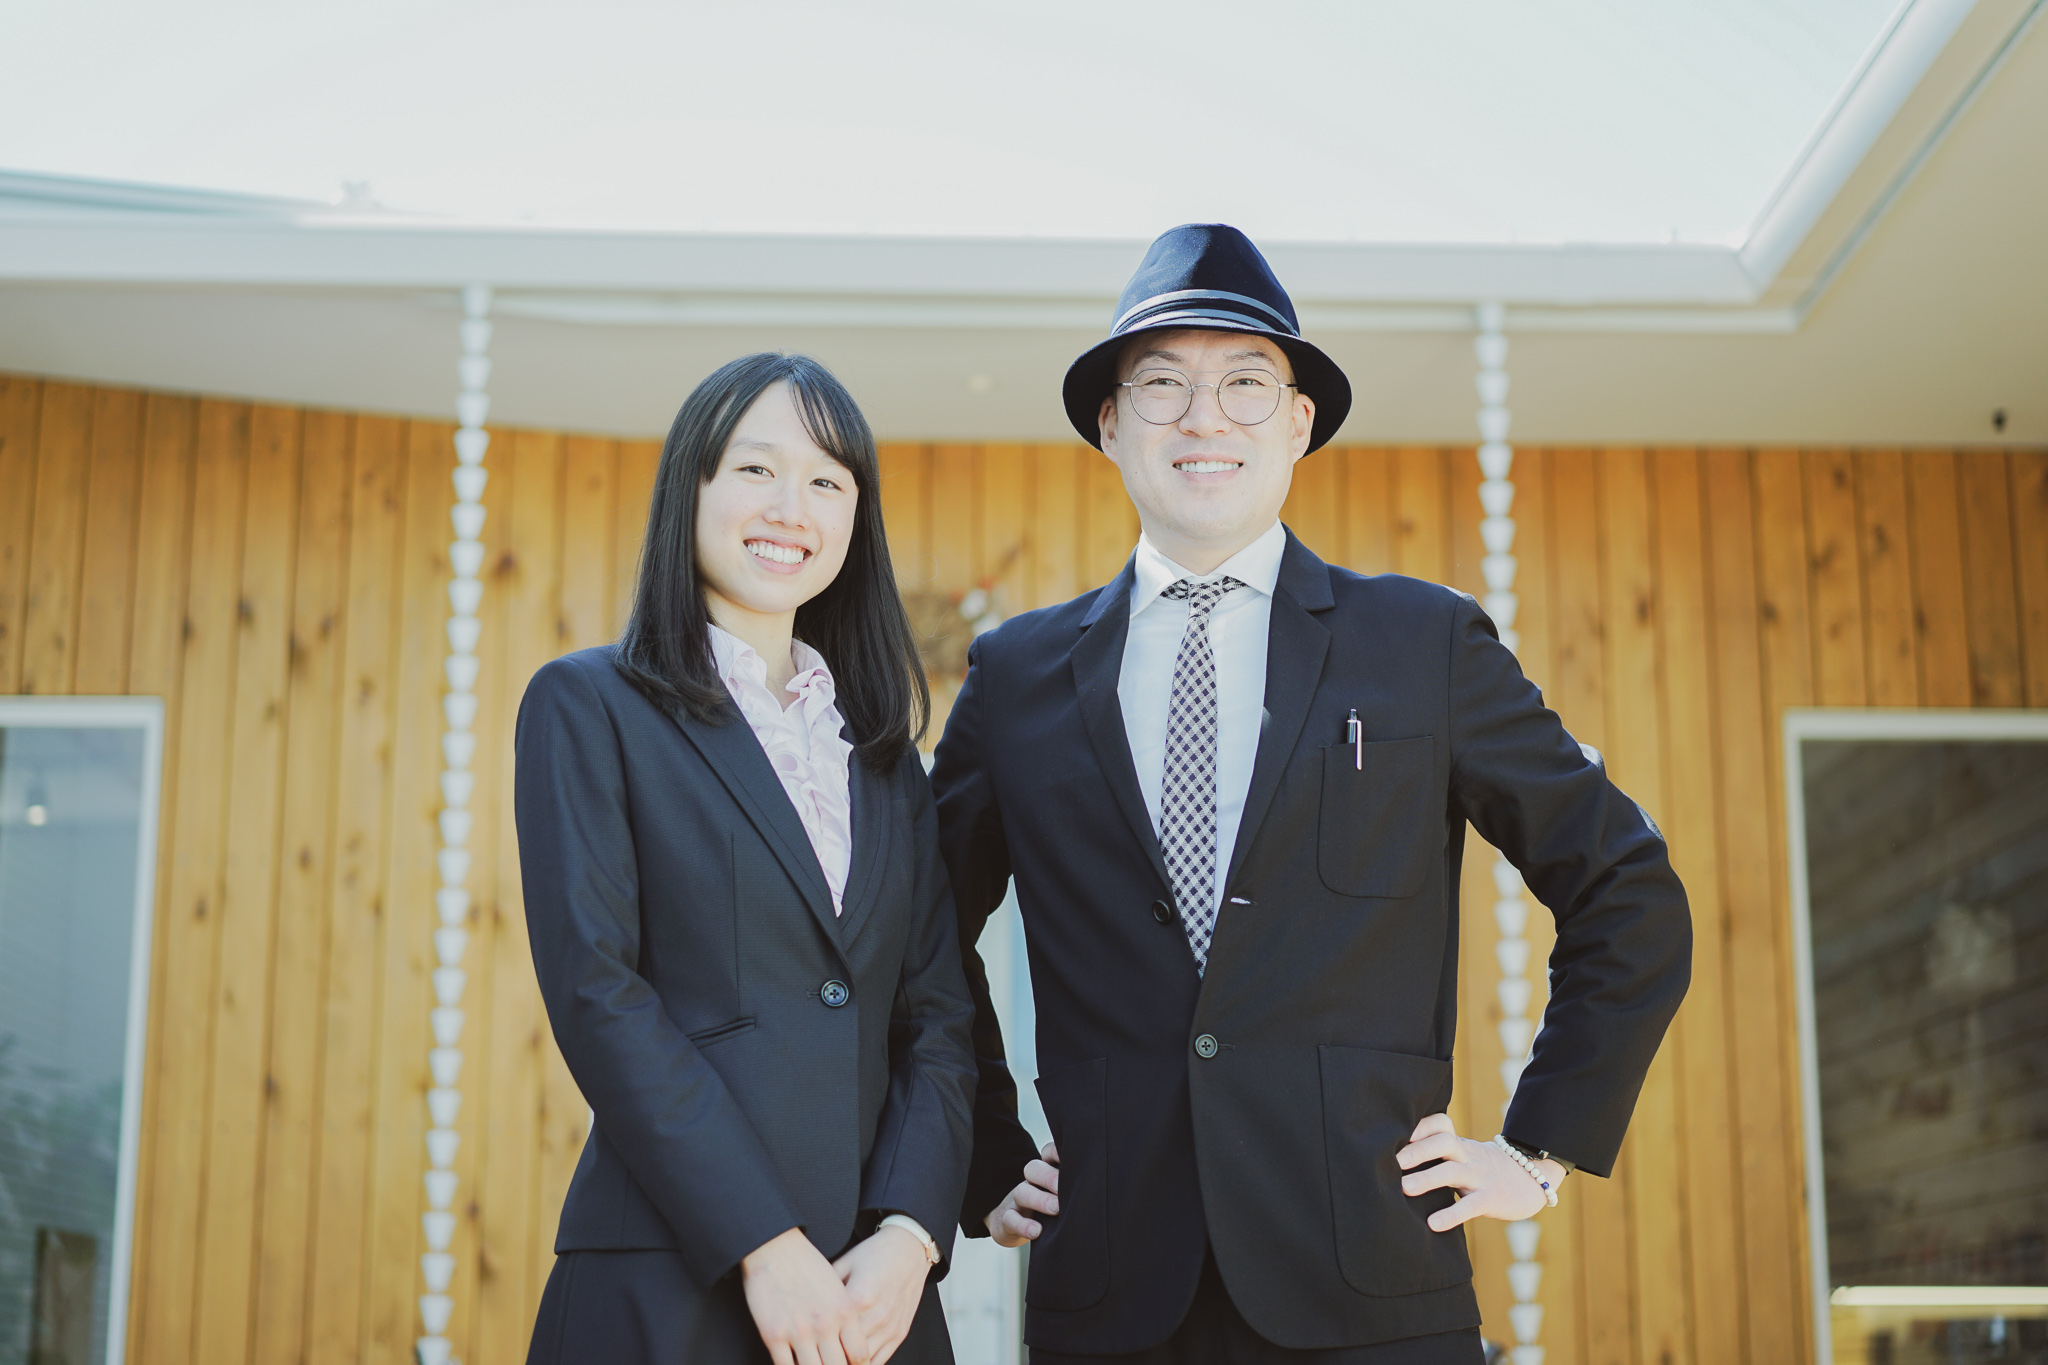 áretユーザーの大学生、江波戸乃々香さん（左）と井上広法さん（右）